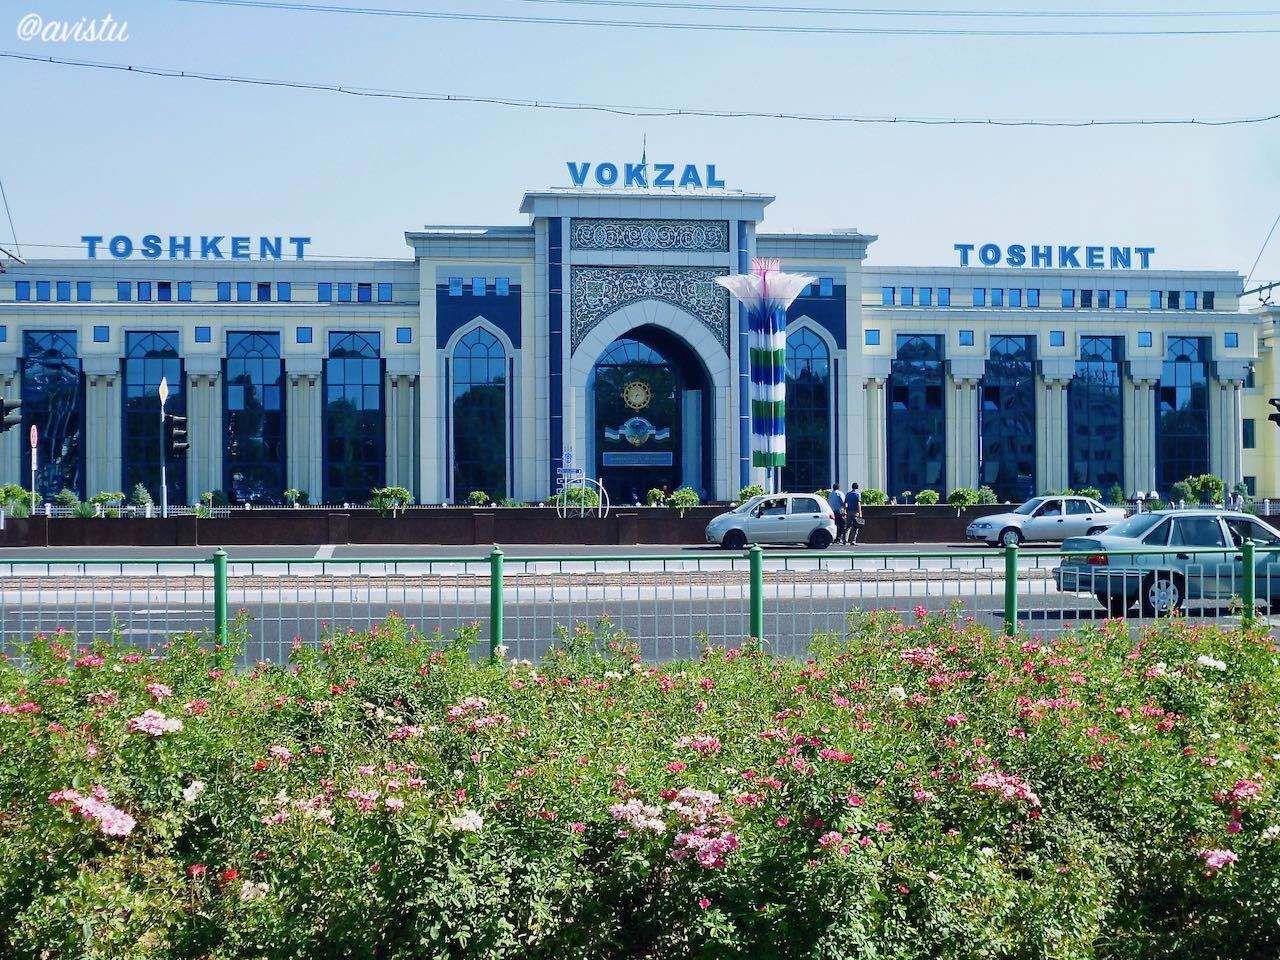 Estación de Ferrocarril de Tashkent, Uzbekistán [(c)Foto: @avistu]